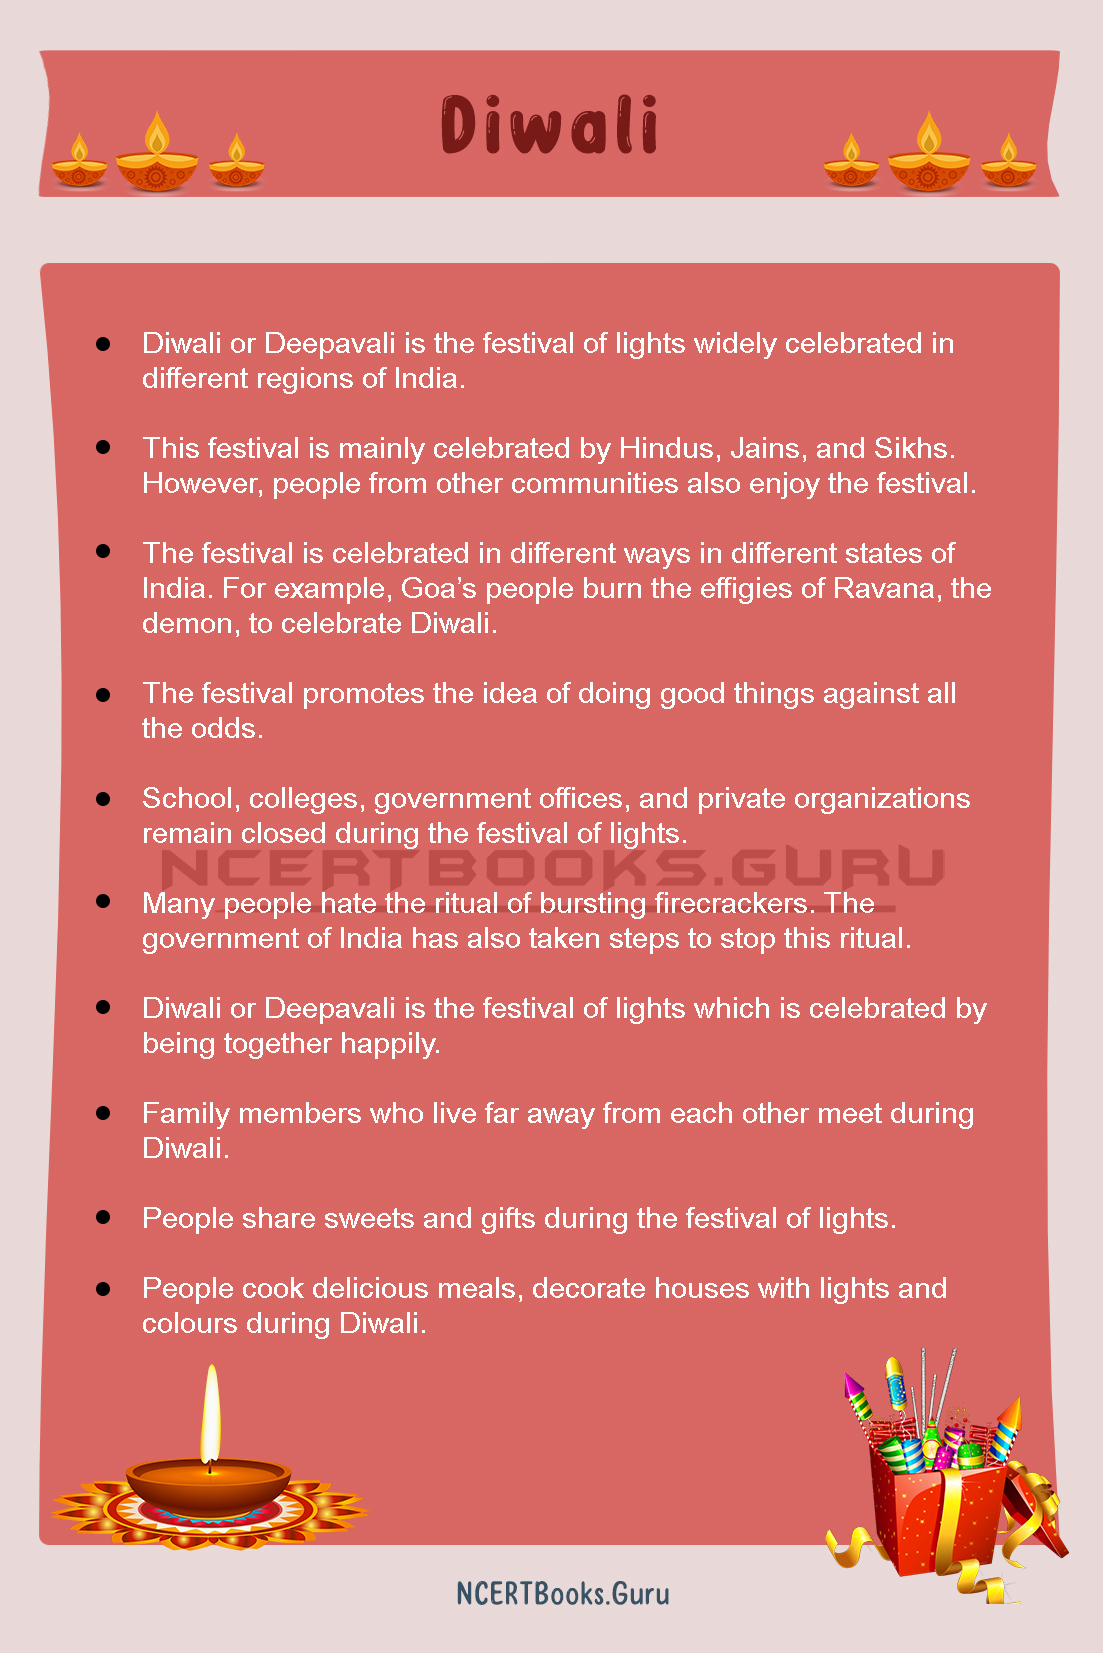 diwali essay for class 5 in english